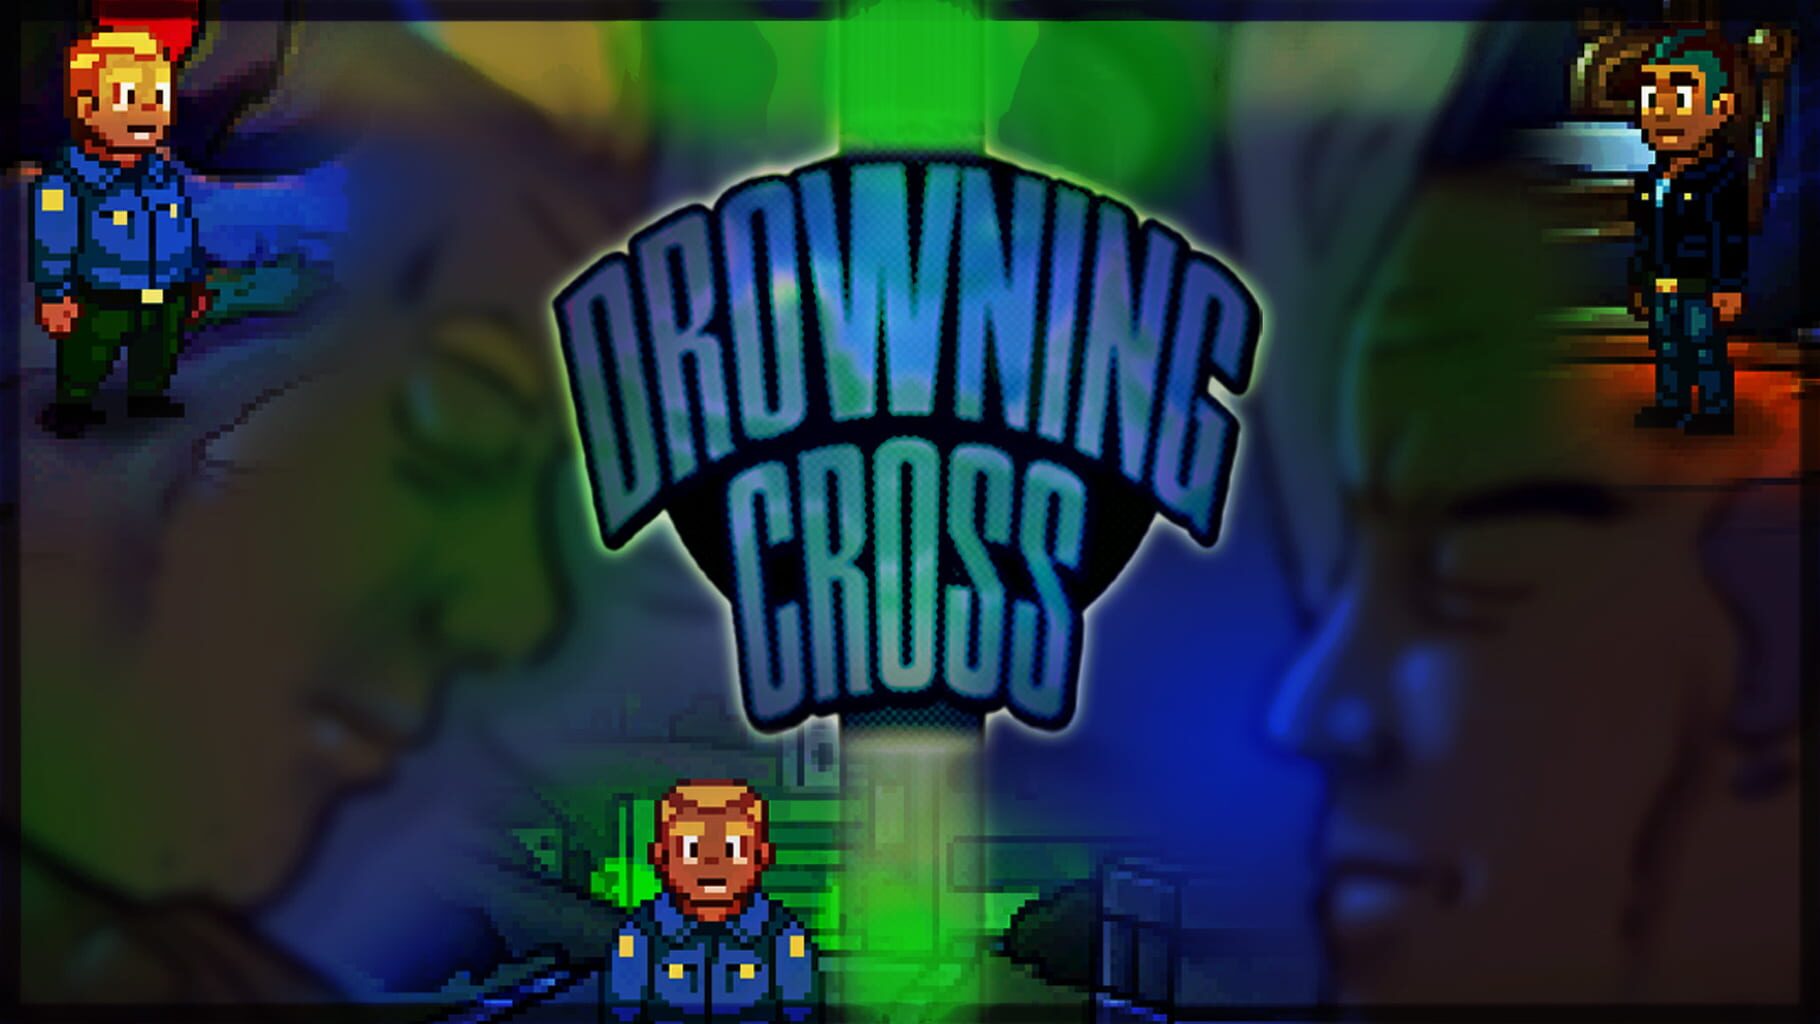 Drowning Cross artwork